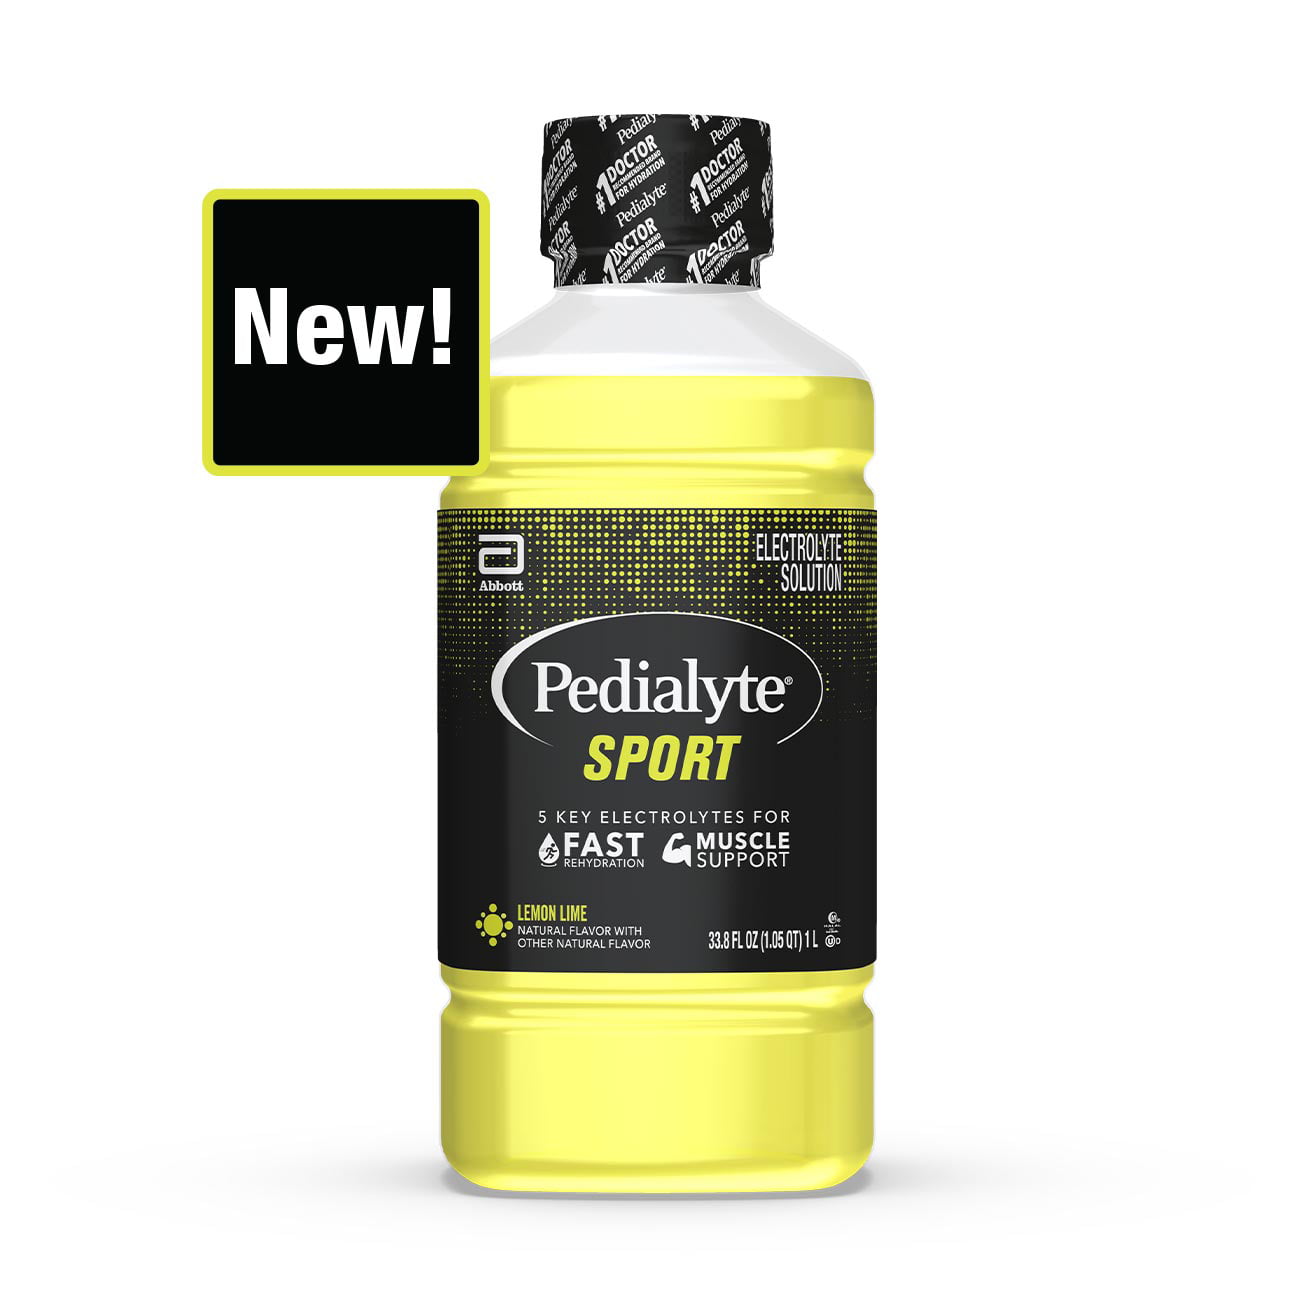 Pedialyte Sport Electrolyte Drink, Fast Hydration with 5 Key